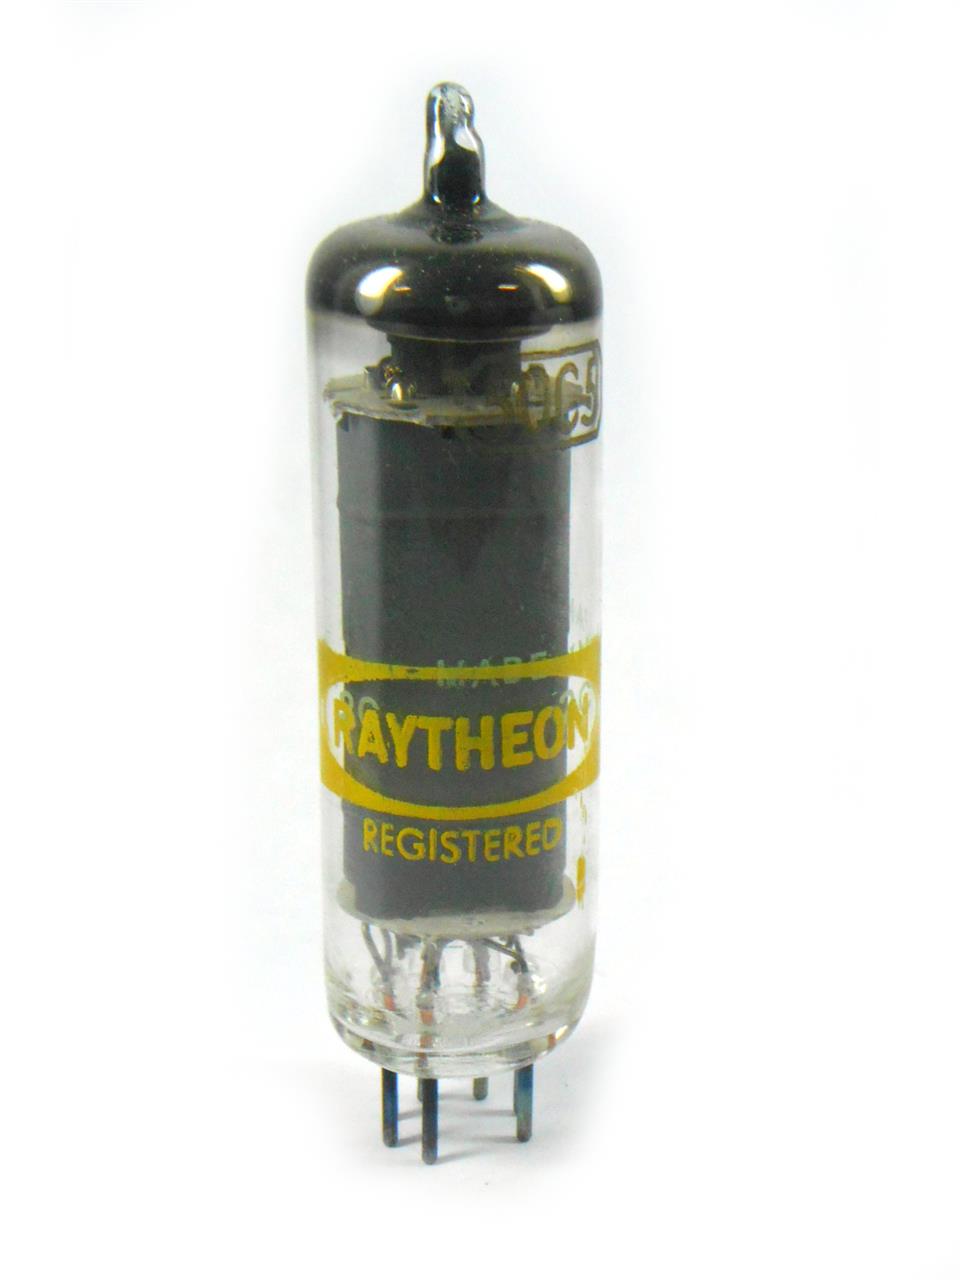 Válvulas eletrônicas pentodo de saída de som para rádios valvulados rabo quente - Válvula HL92 / 50C5 Raytheon